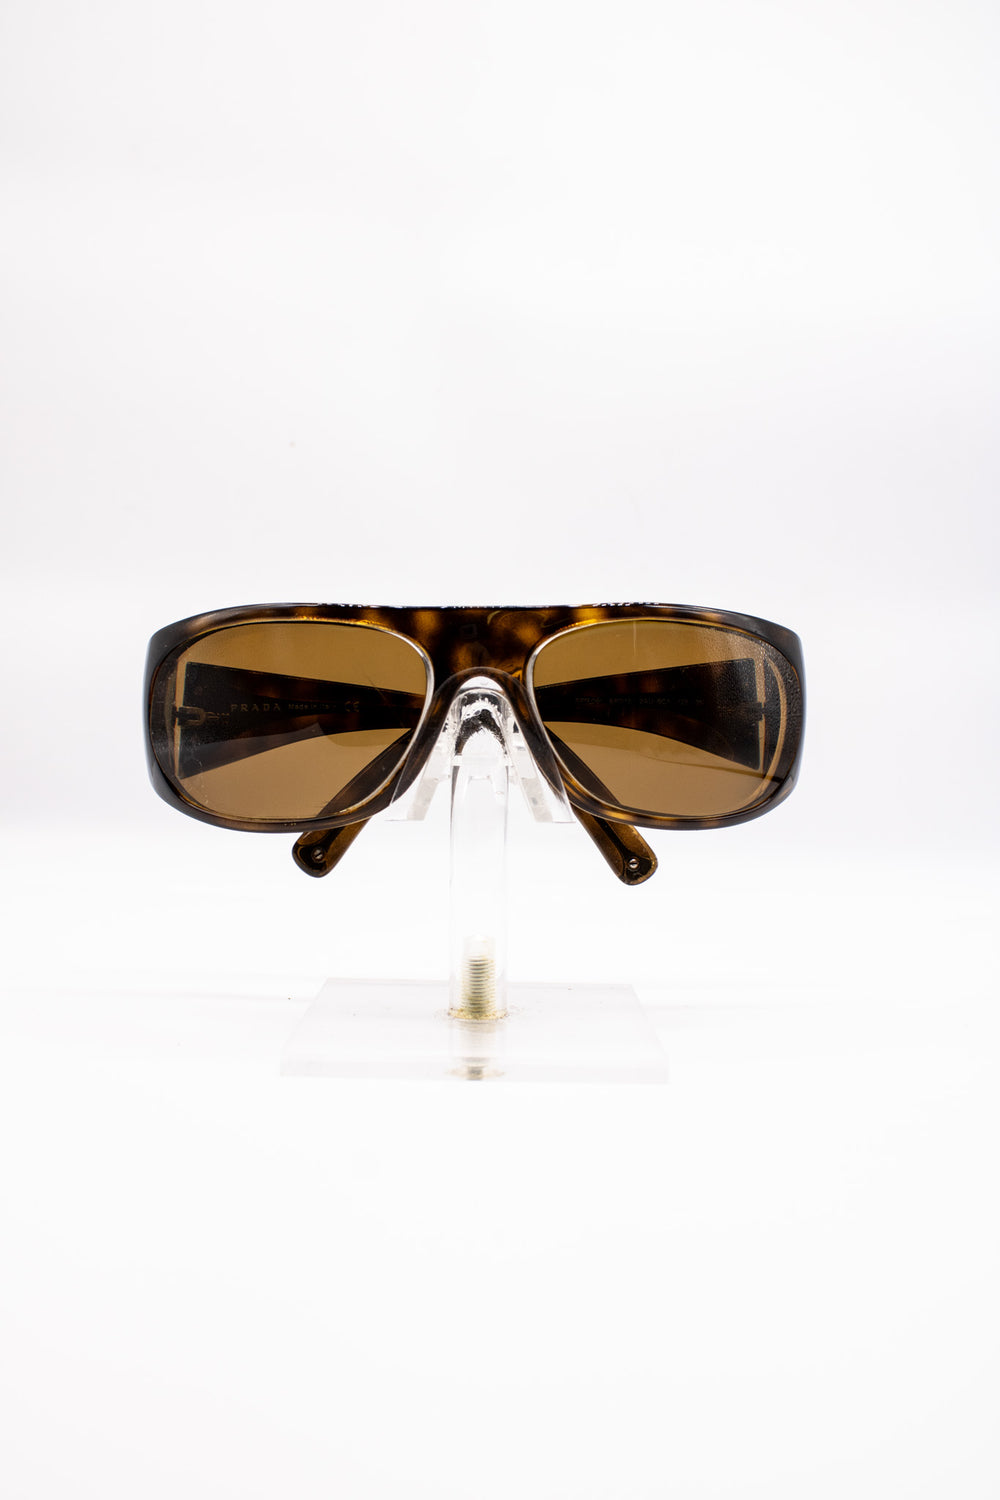 Prada Mens Brown Wrap Shield Sunglasses in Tortoise Shell